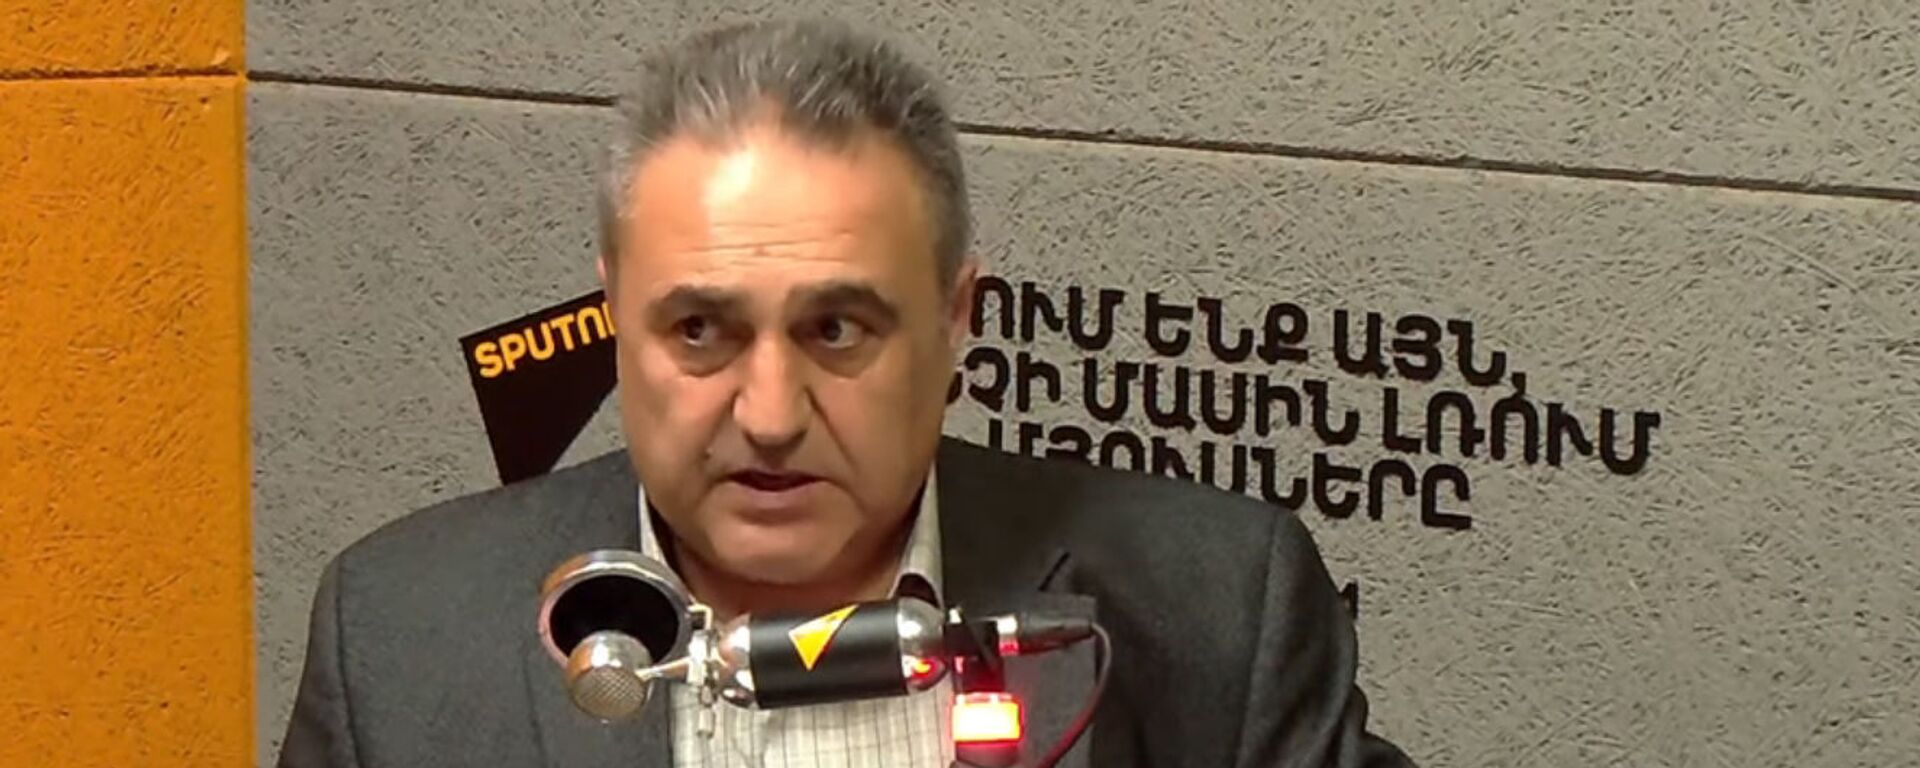 Политолог Армен Багдасарян в гостях радио Sputnik Армения - Sputnik Արմենիա, 1920, 17.05.2021